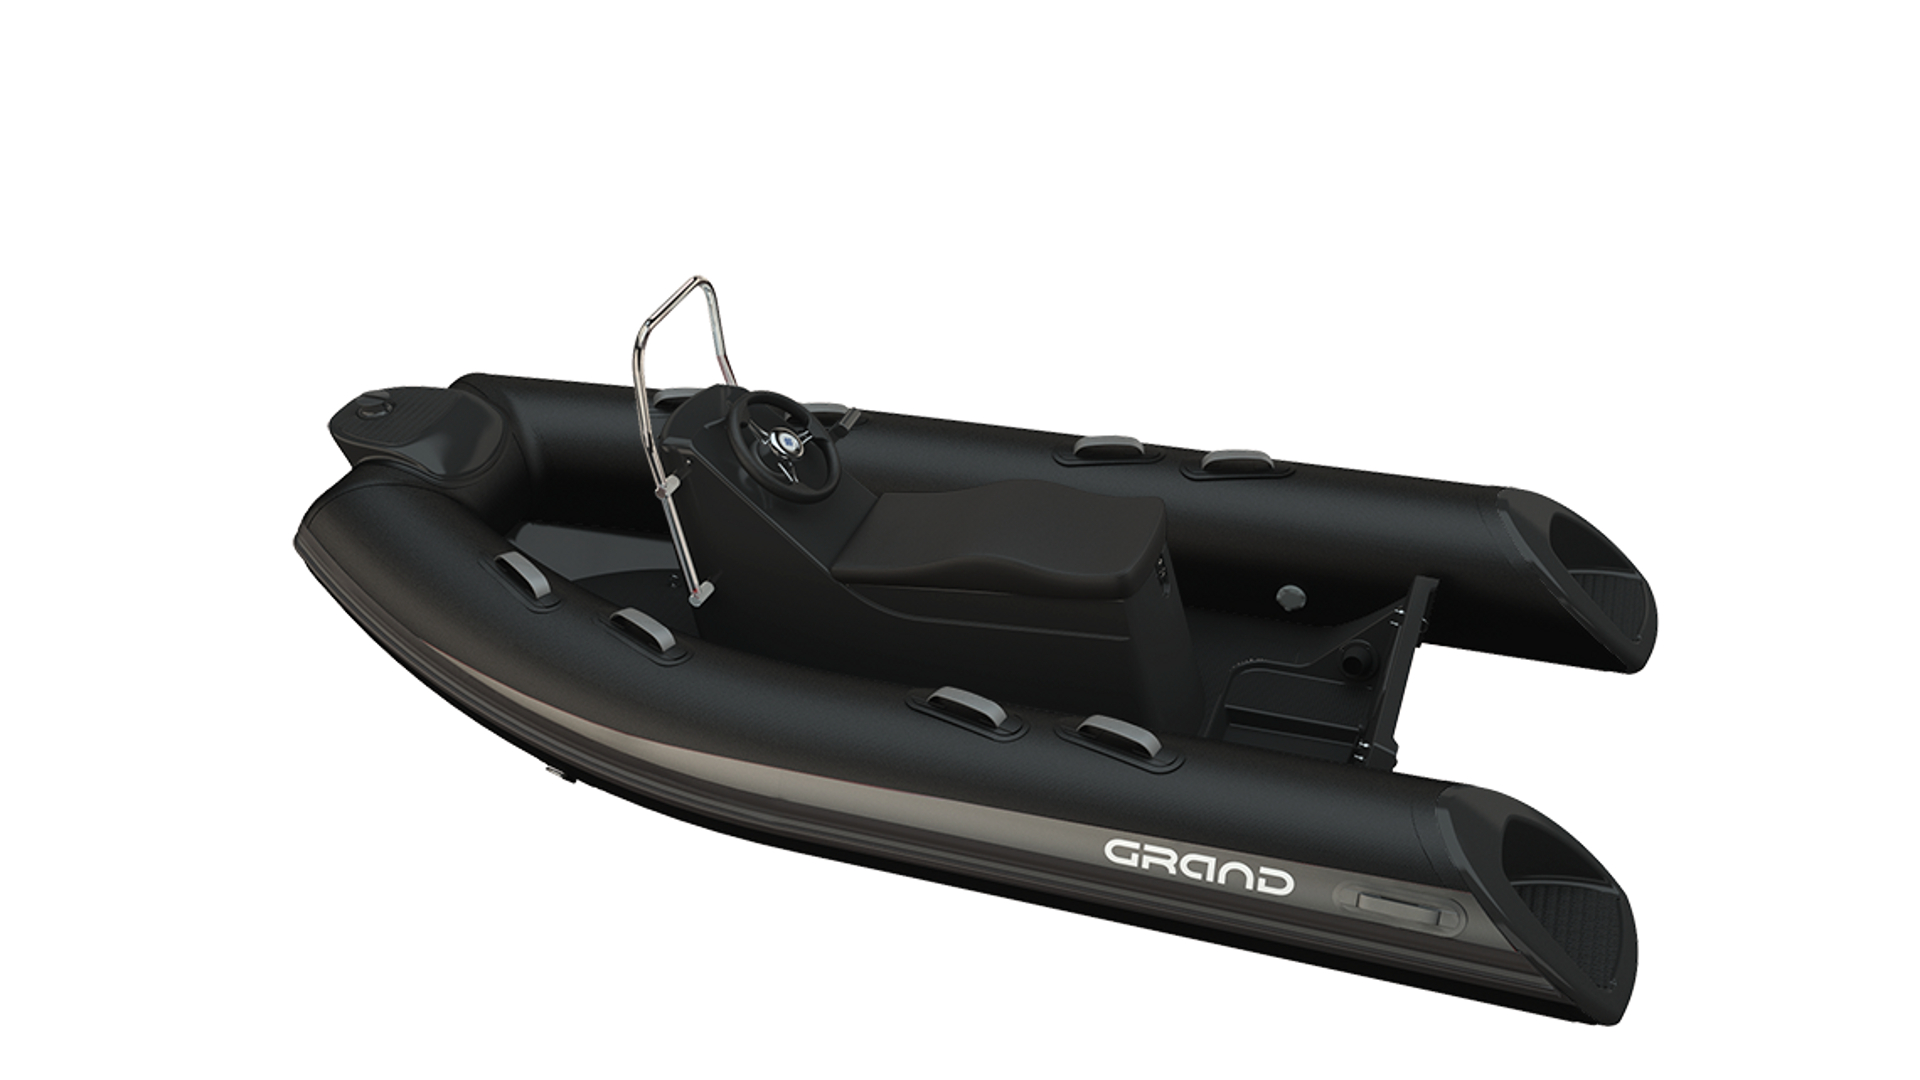 Надувная лодка с жестким дном GRAND Silver Line S330S, Надувная лодка GRAND Silver Line S330S, GRAND Silver Line S330S, GRAND Silver Line S330SF, GRAND S330S, GRAND S330SF, GRAND S330, Rigid Inflatable Boats GRAND, RIB GRAND